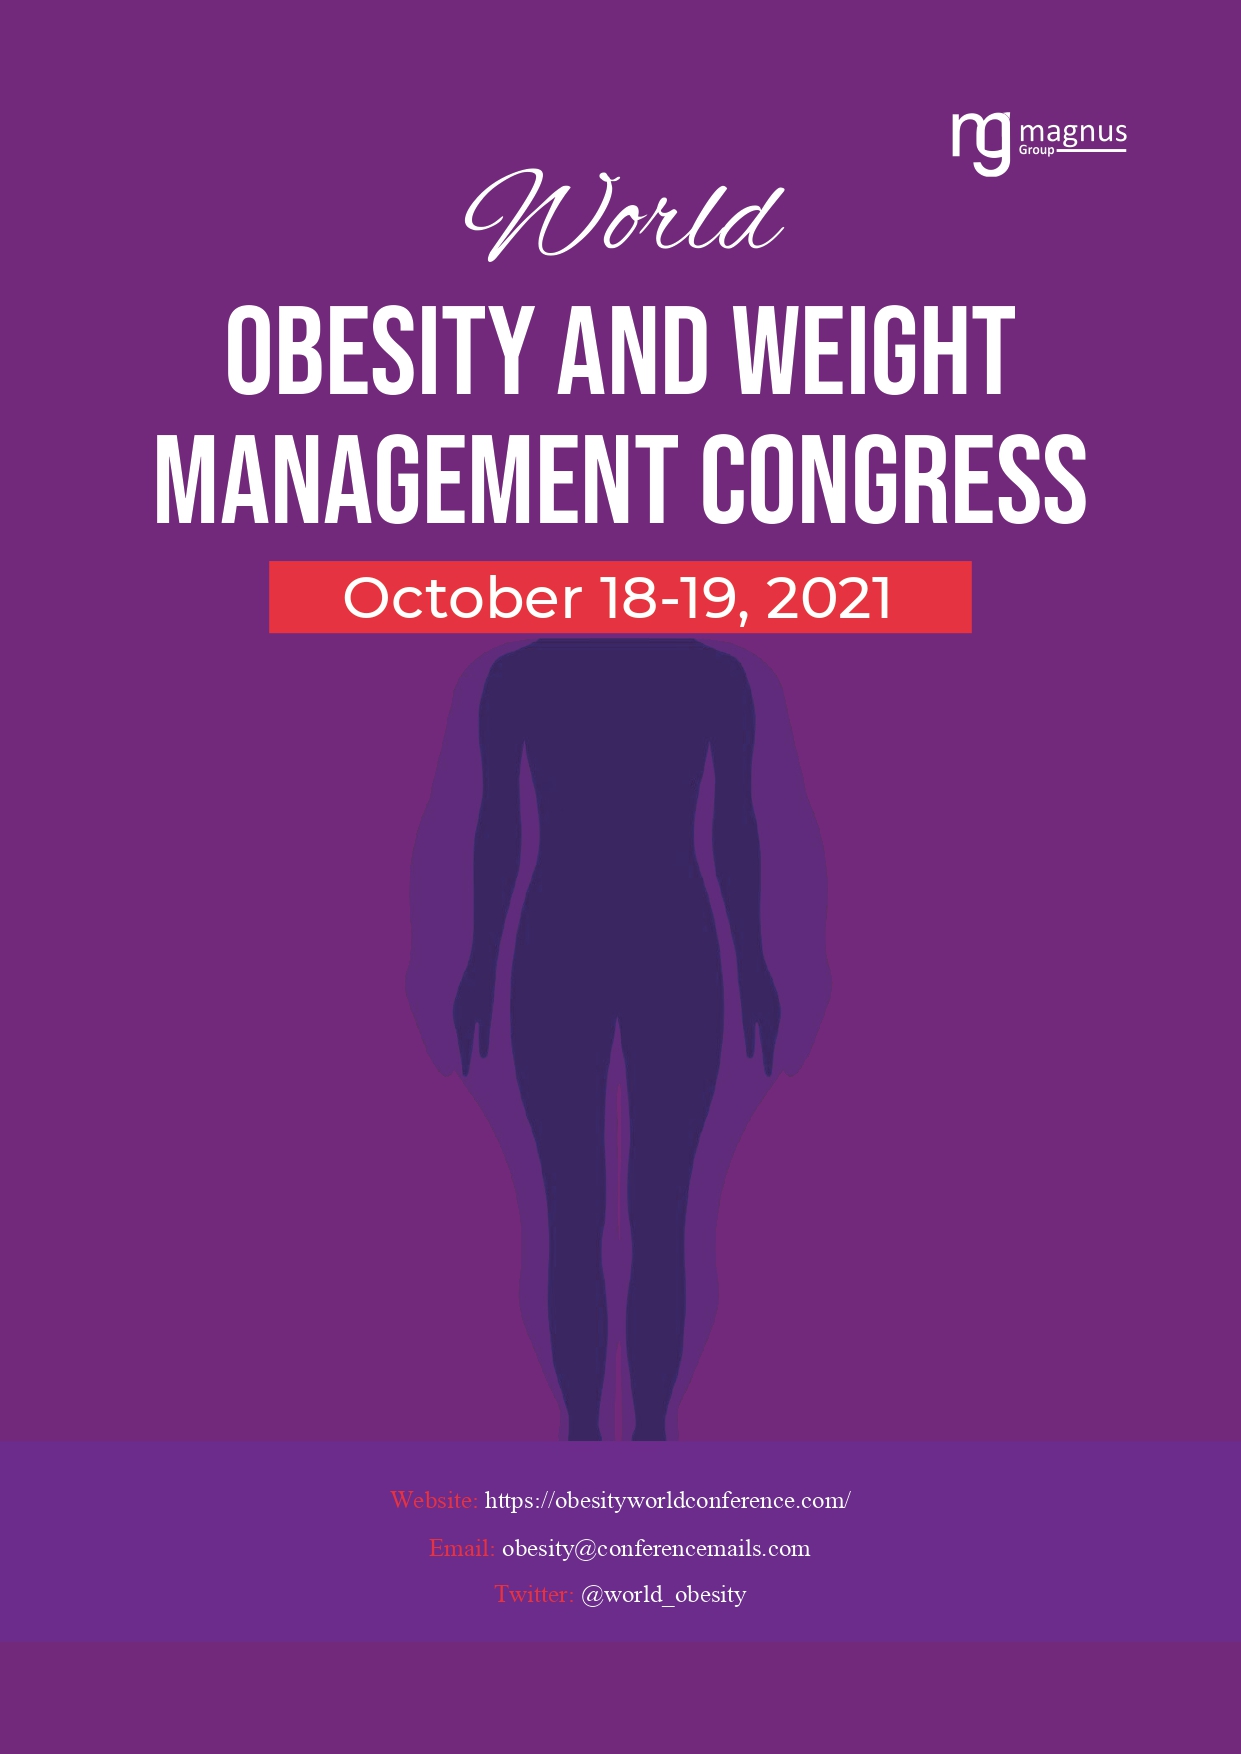 World Obesity and Weight Management Congress | Online Event Event Book